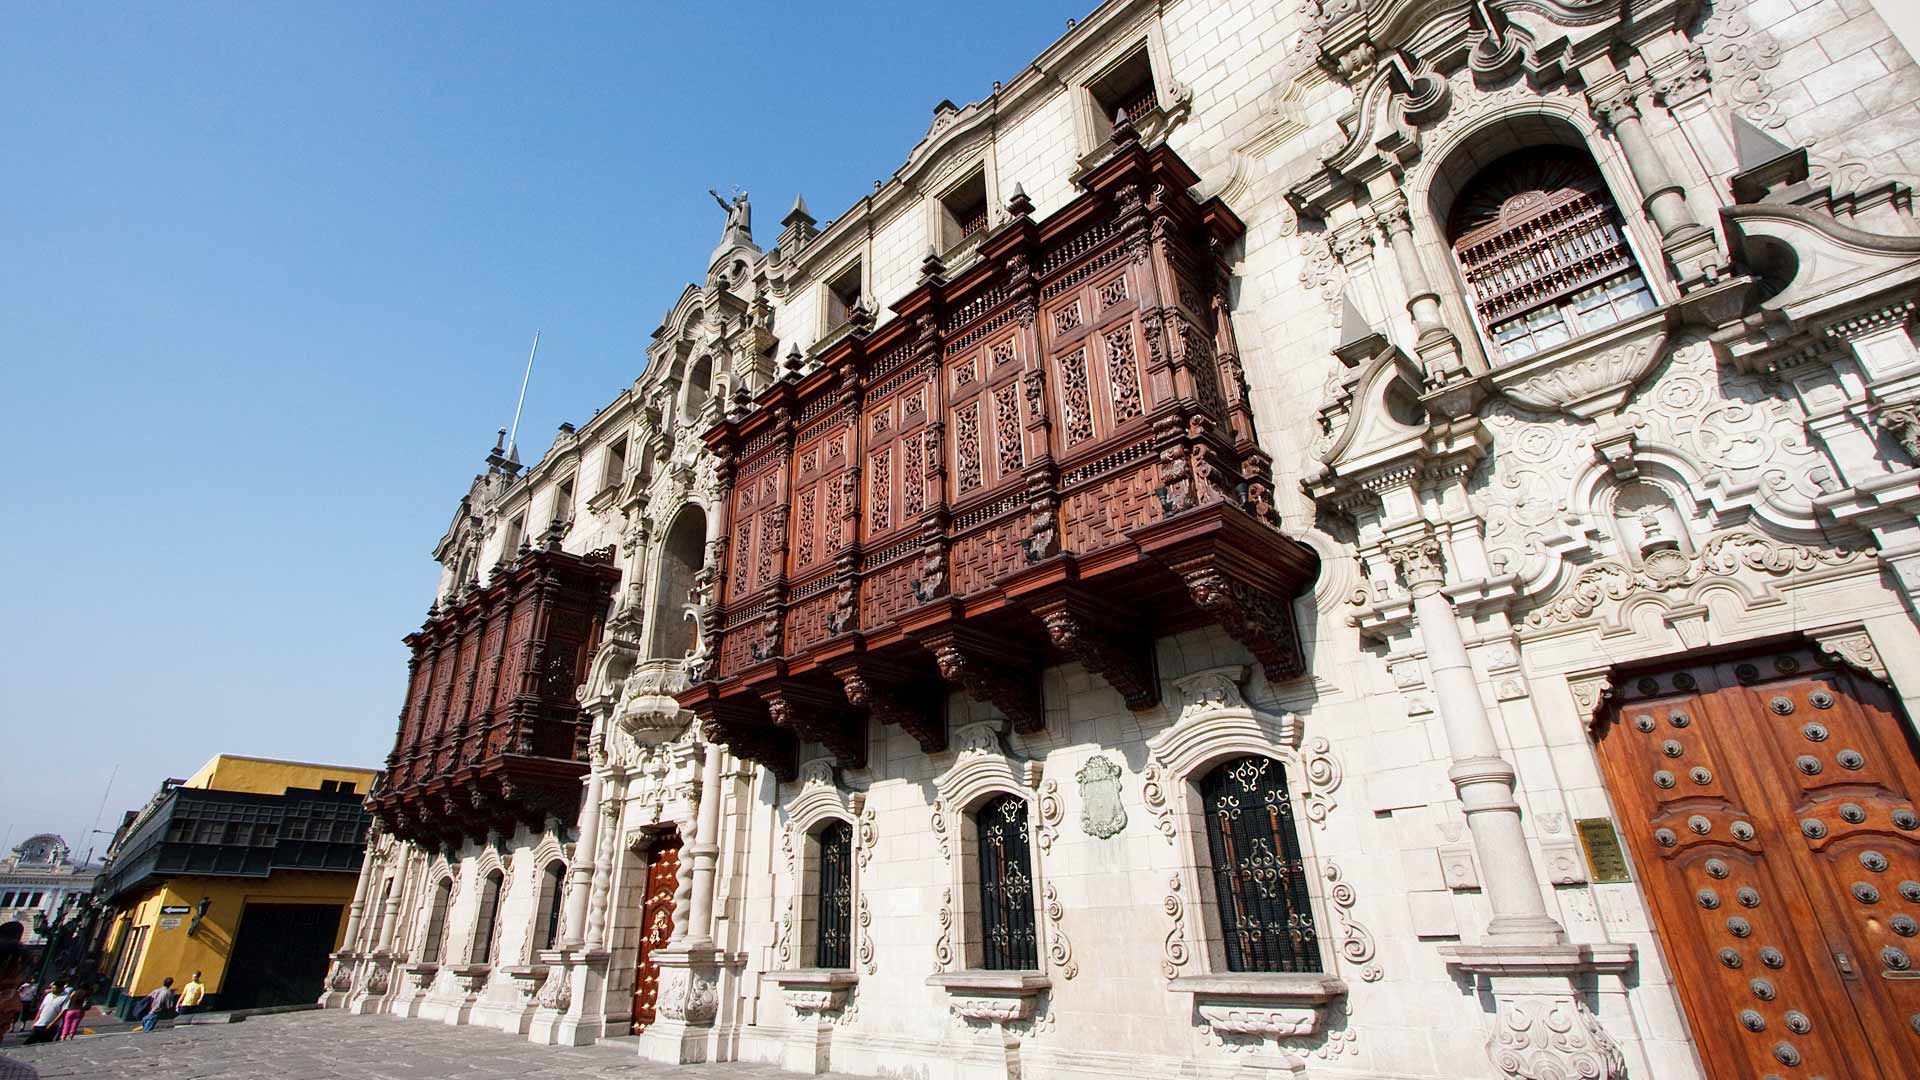 Moorish balconies of the Palacio Arzobispal (Archbishop's Palace) adjacent to the Cathedral of Lima